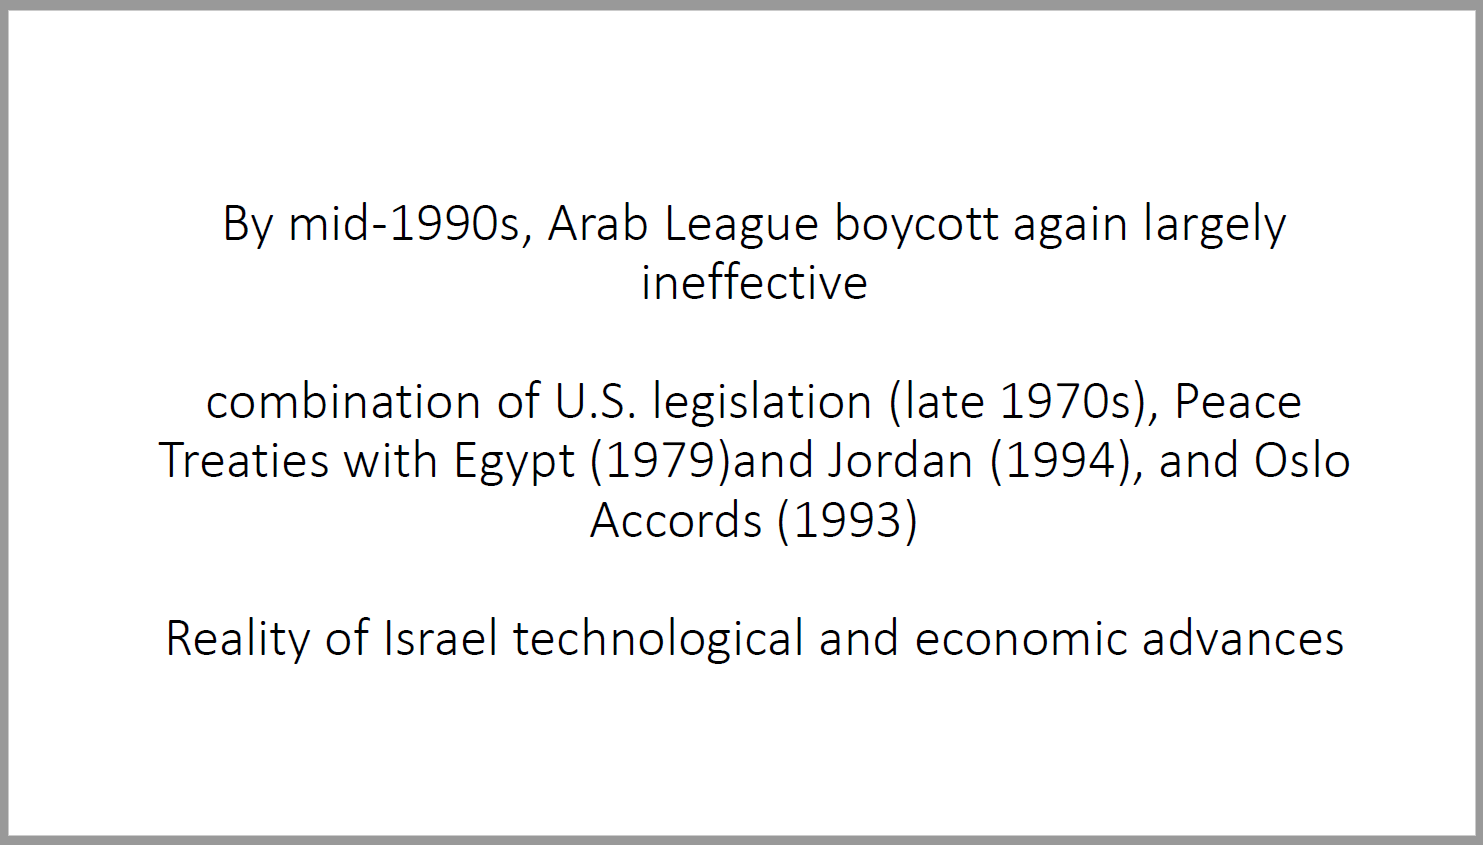 bds-history-slide-arab-league-boycott-by-1990s